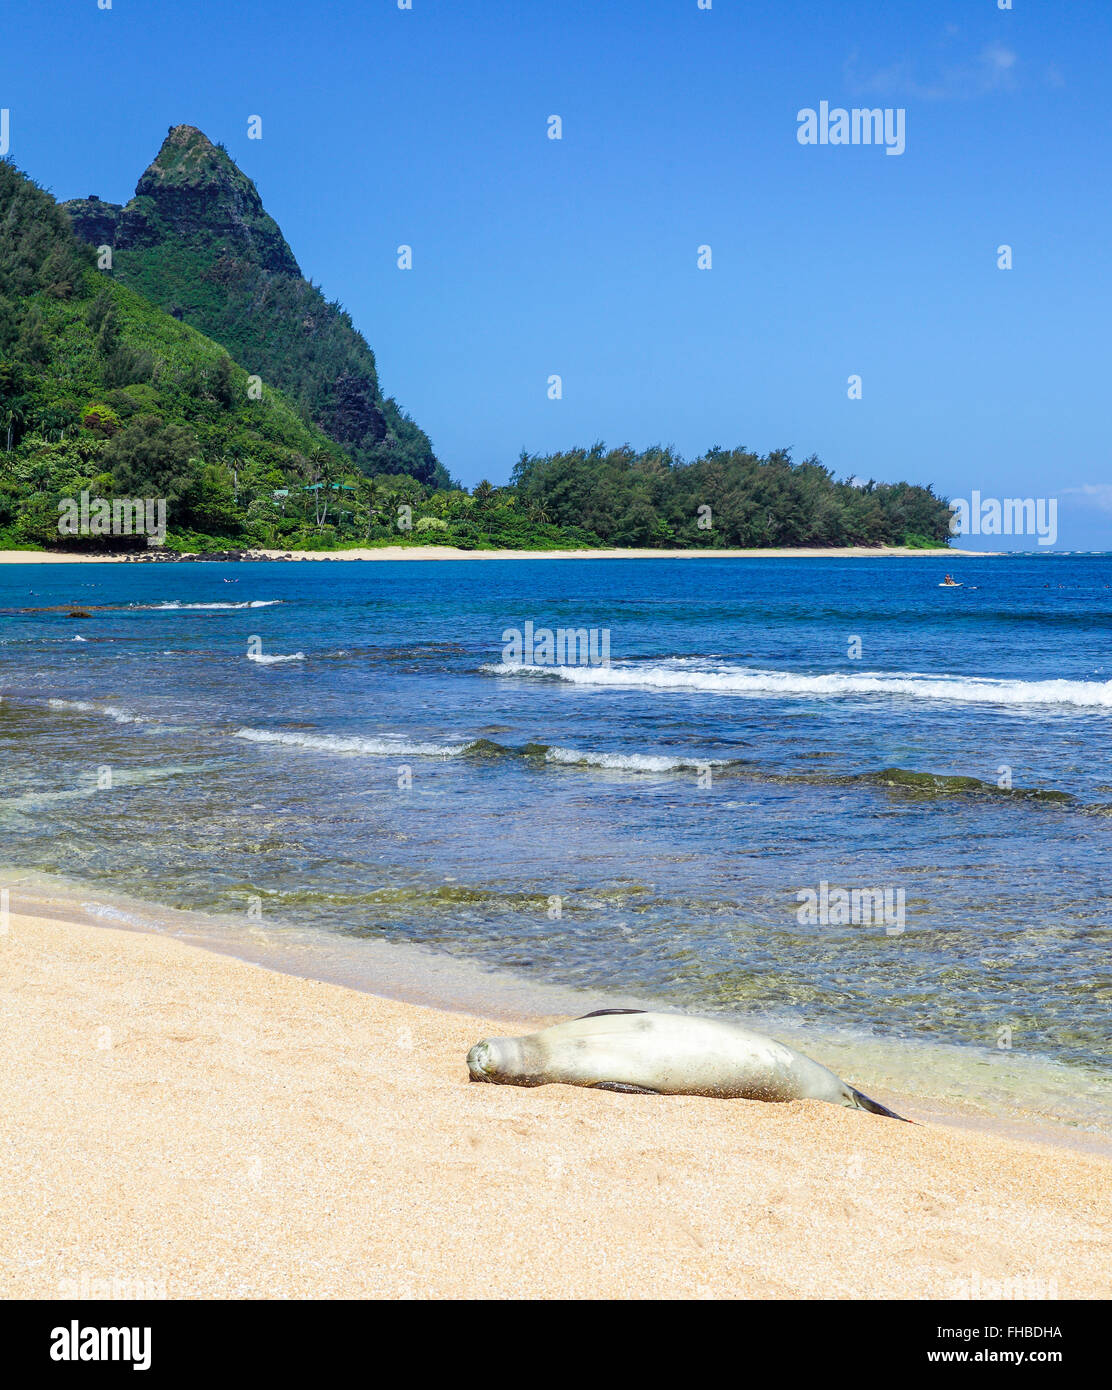 Hawaiian monk seal resting on beach in Haena, with Mt. Makana, called Bali Hai, in the background Stock Photo